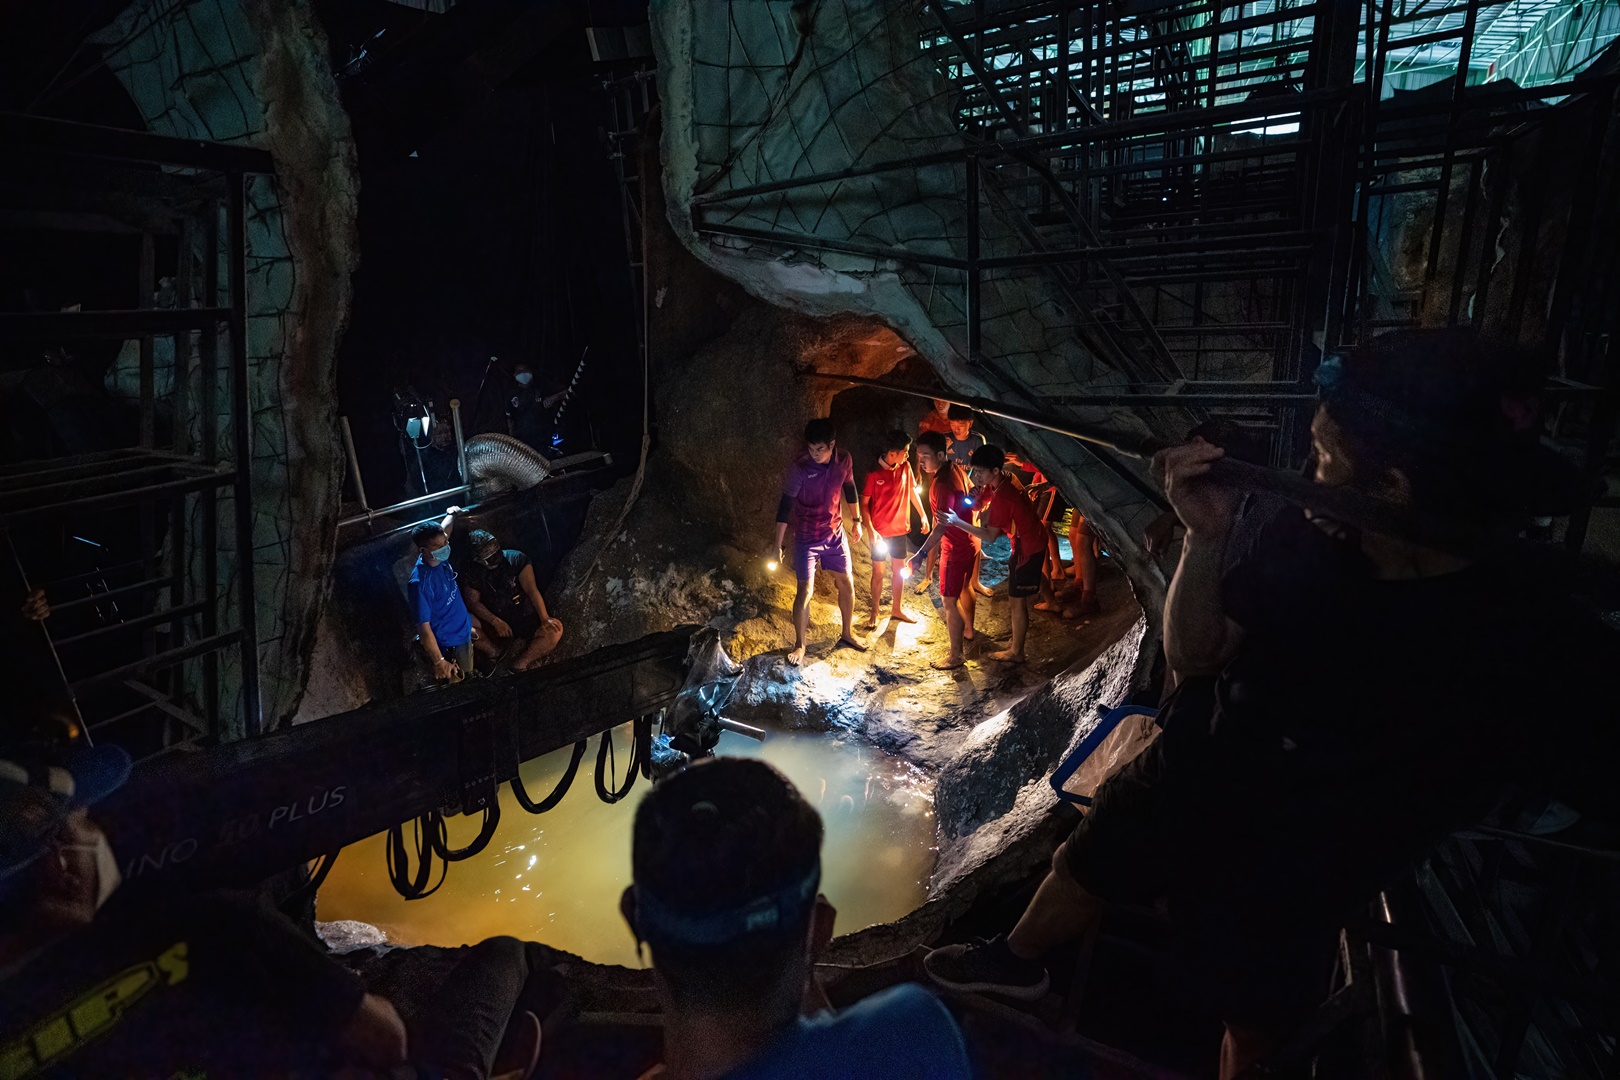  Netflix เผยเบื้องหลัง ถ้ำหลวง: ภารกิจแห่งความหวัง (Thai Cave Rescue) พาชมทุกแง่มุมการถ่ายทำเพื่อความสมบูรณ์แบบของลิมิเต็ดซีรีส์ หลังทะยานติดอันดับ Netflix Top 10 Global ด้วยยอดชม 13.4 ล้านชั่วโมงภายในสัปดาห์แรก